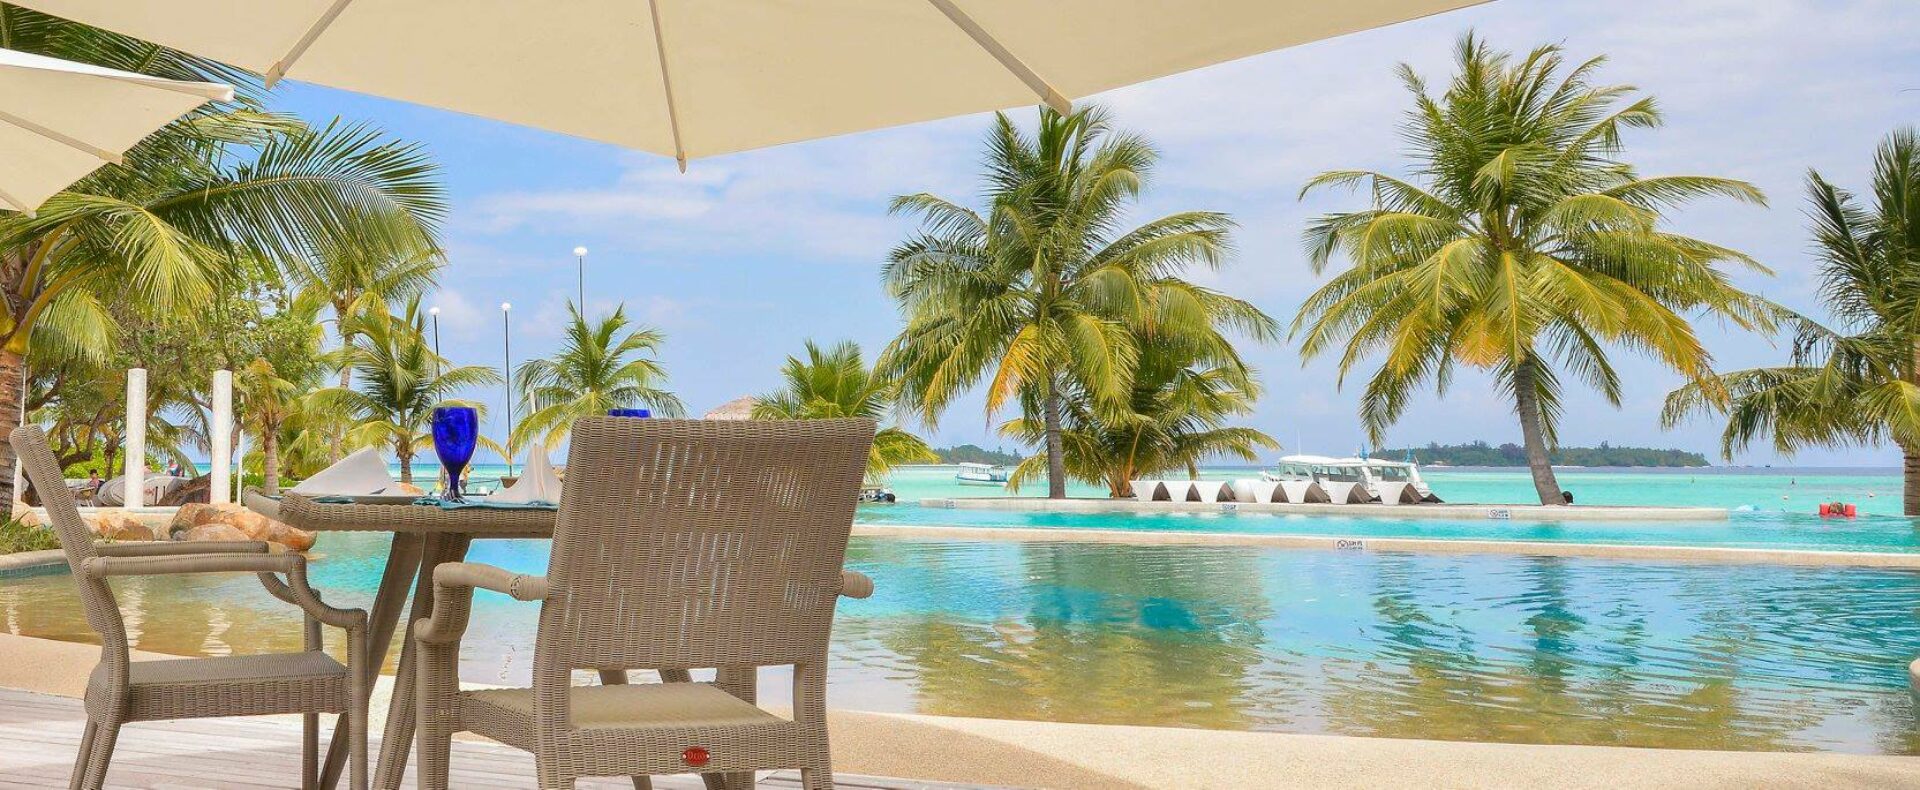 Holiday Inn Resort Kandooma malediven original asia rondreis sri lanka malediven vakantie pool 3